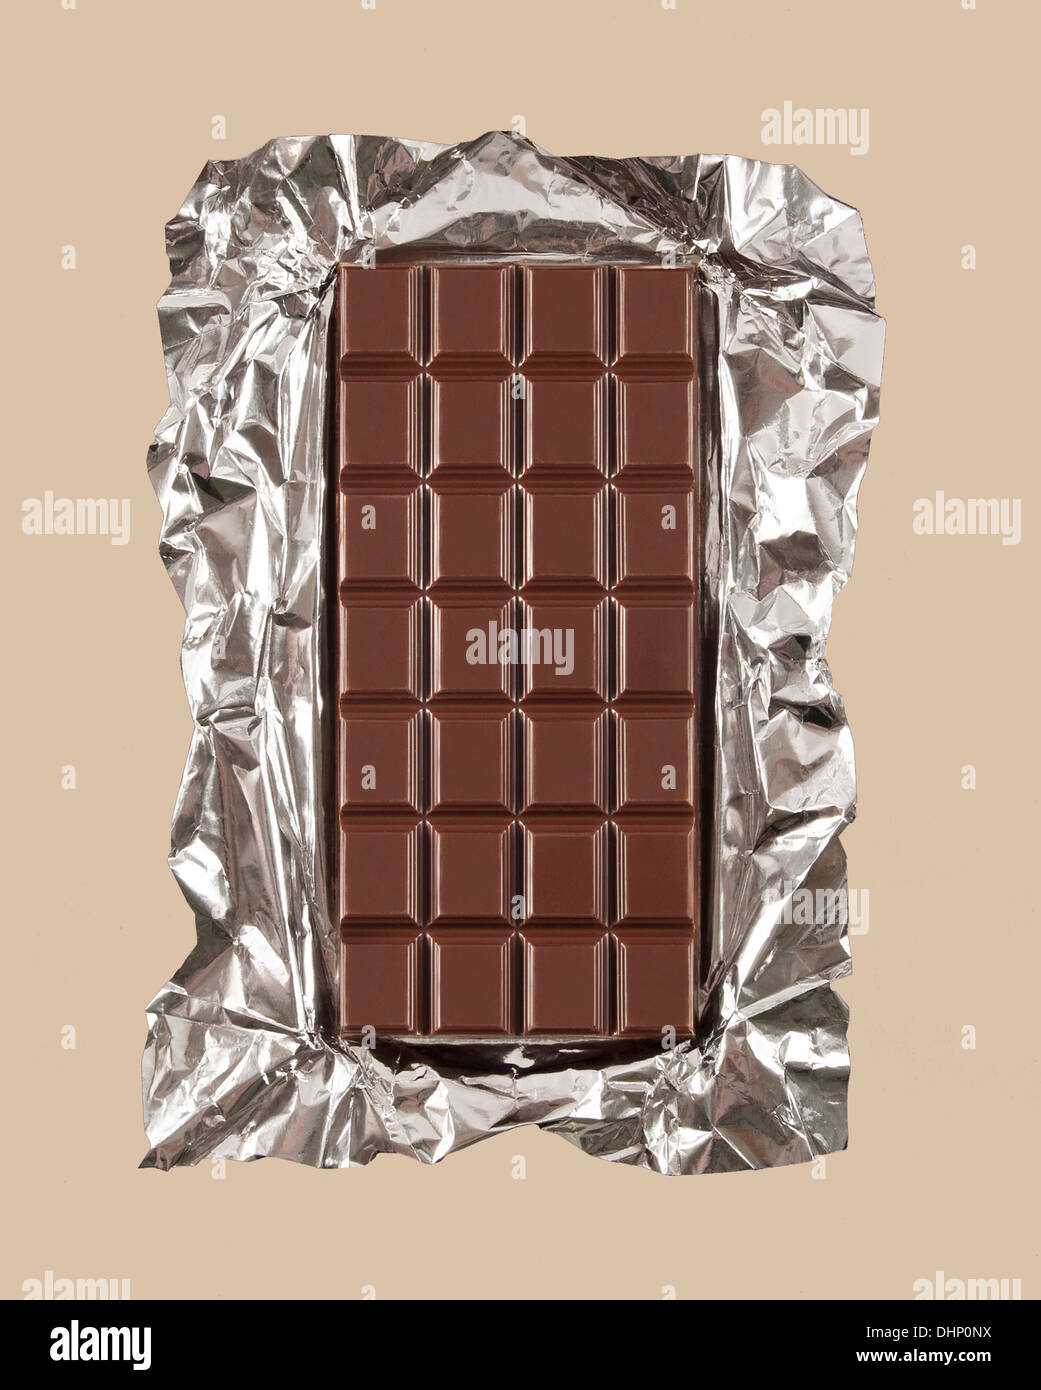 Bonbons au chocolat bar avec unwrapped aluminium Banque D'Images